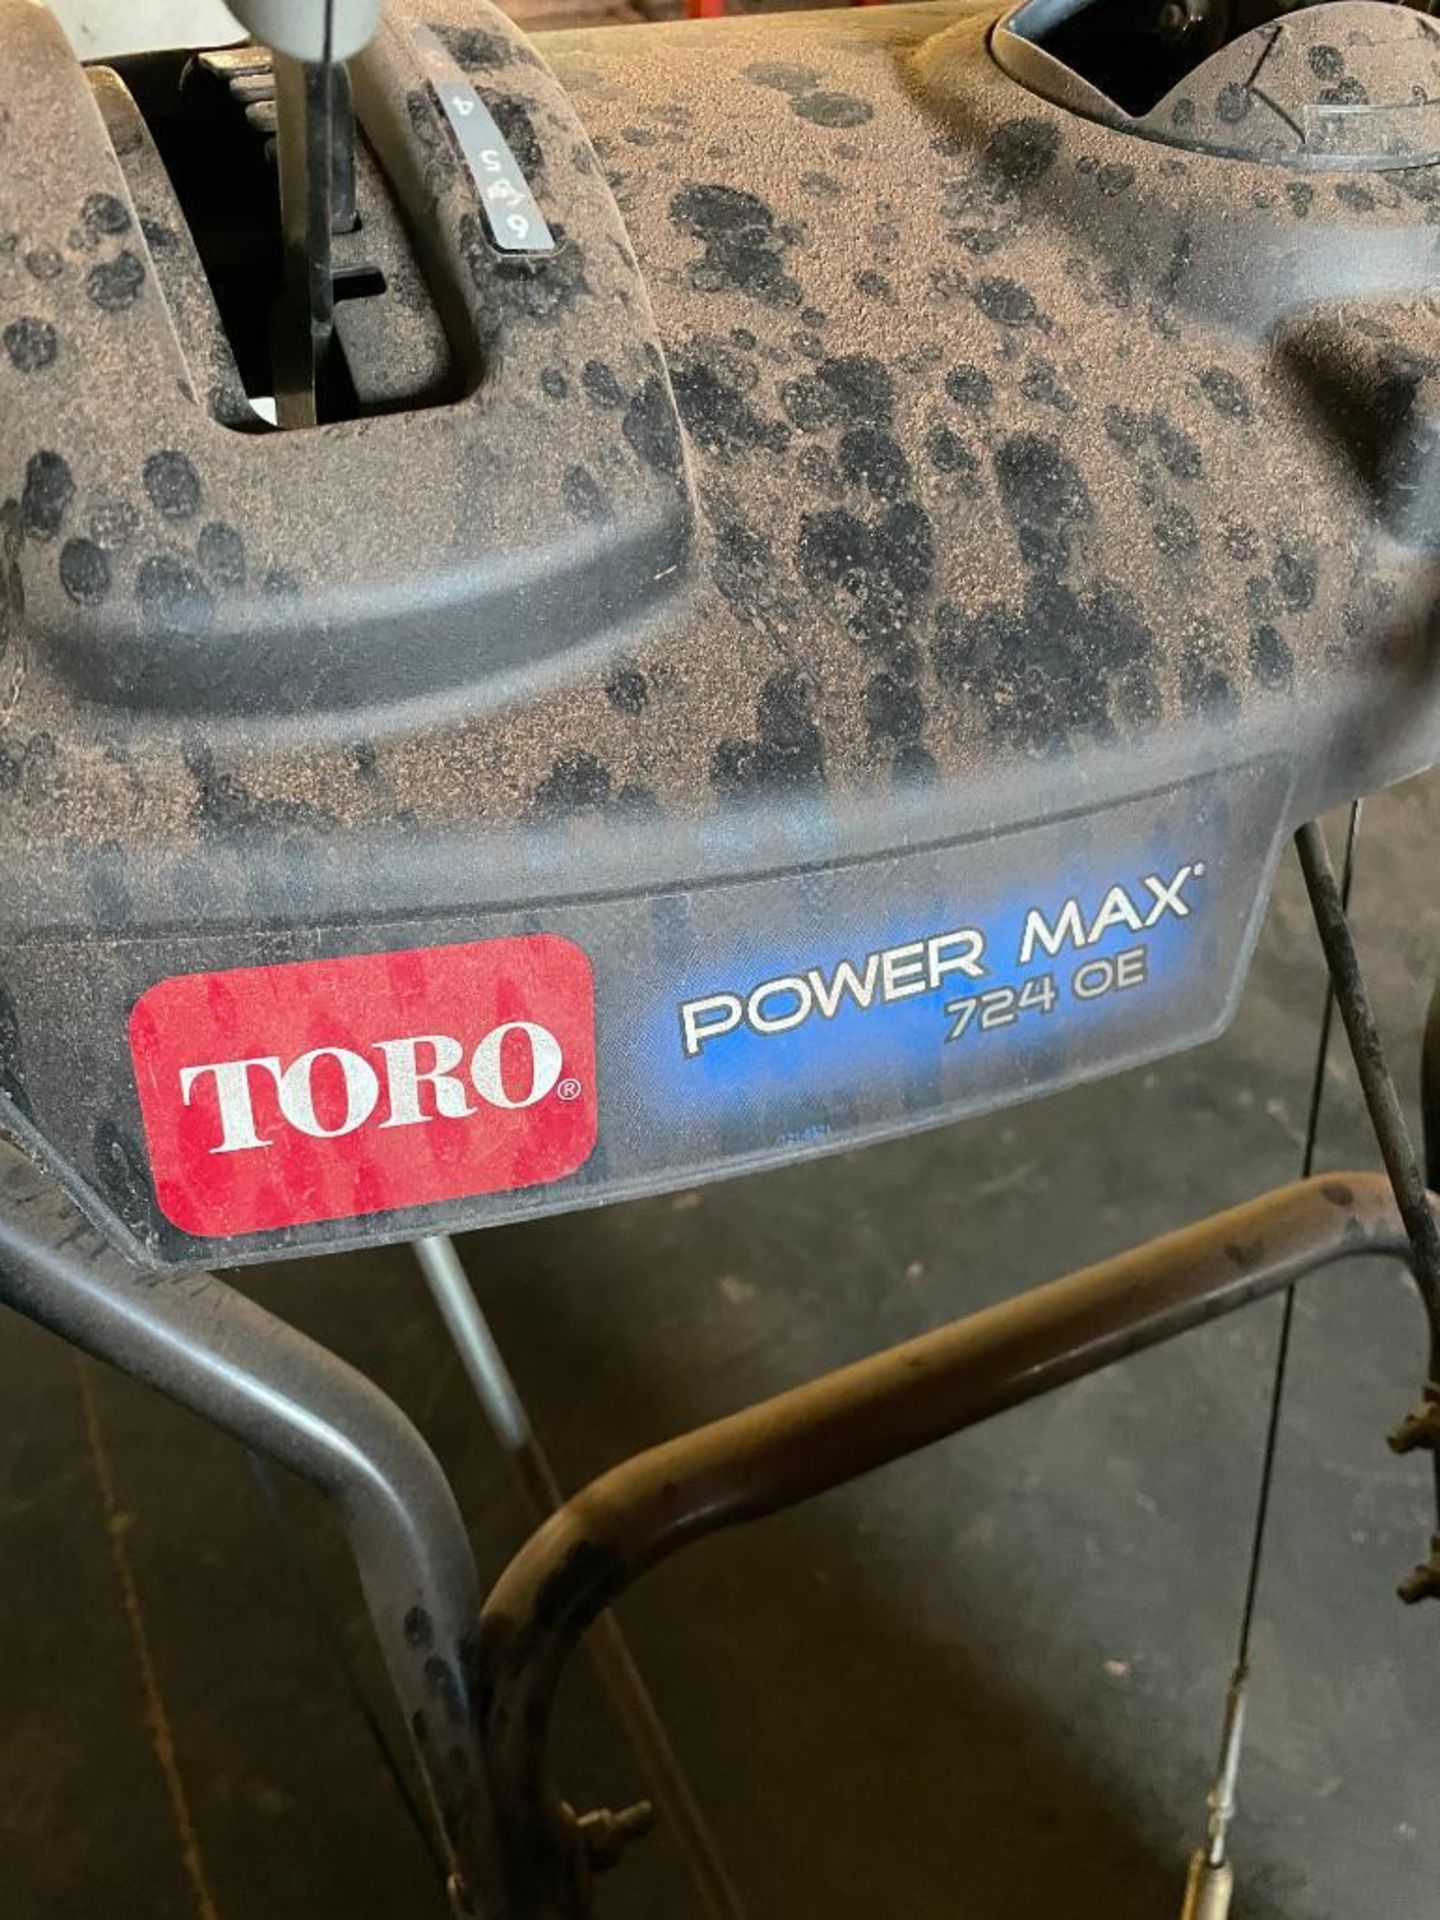 Toro Power Max 724 OE Snowblower - Image 2 of 2